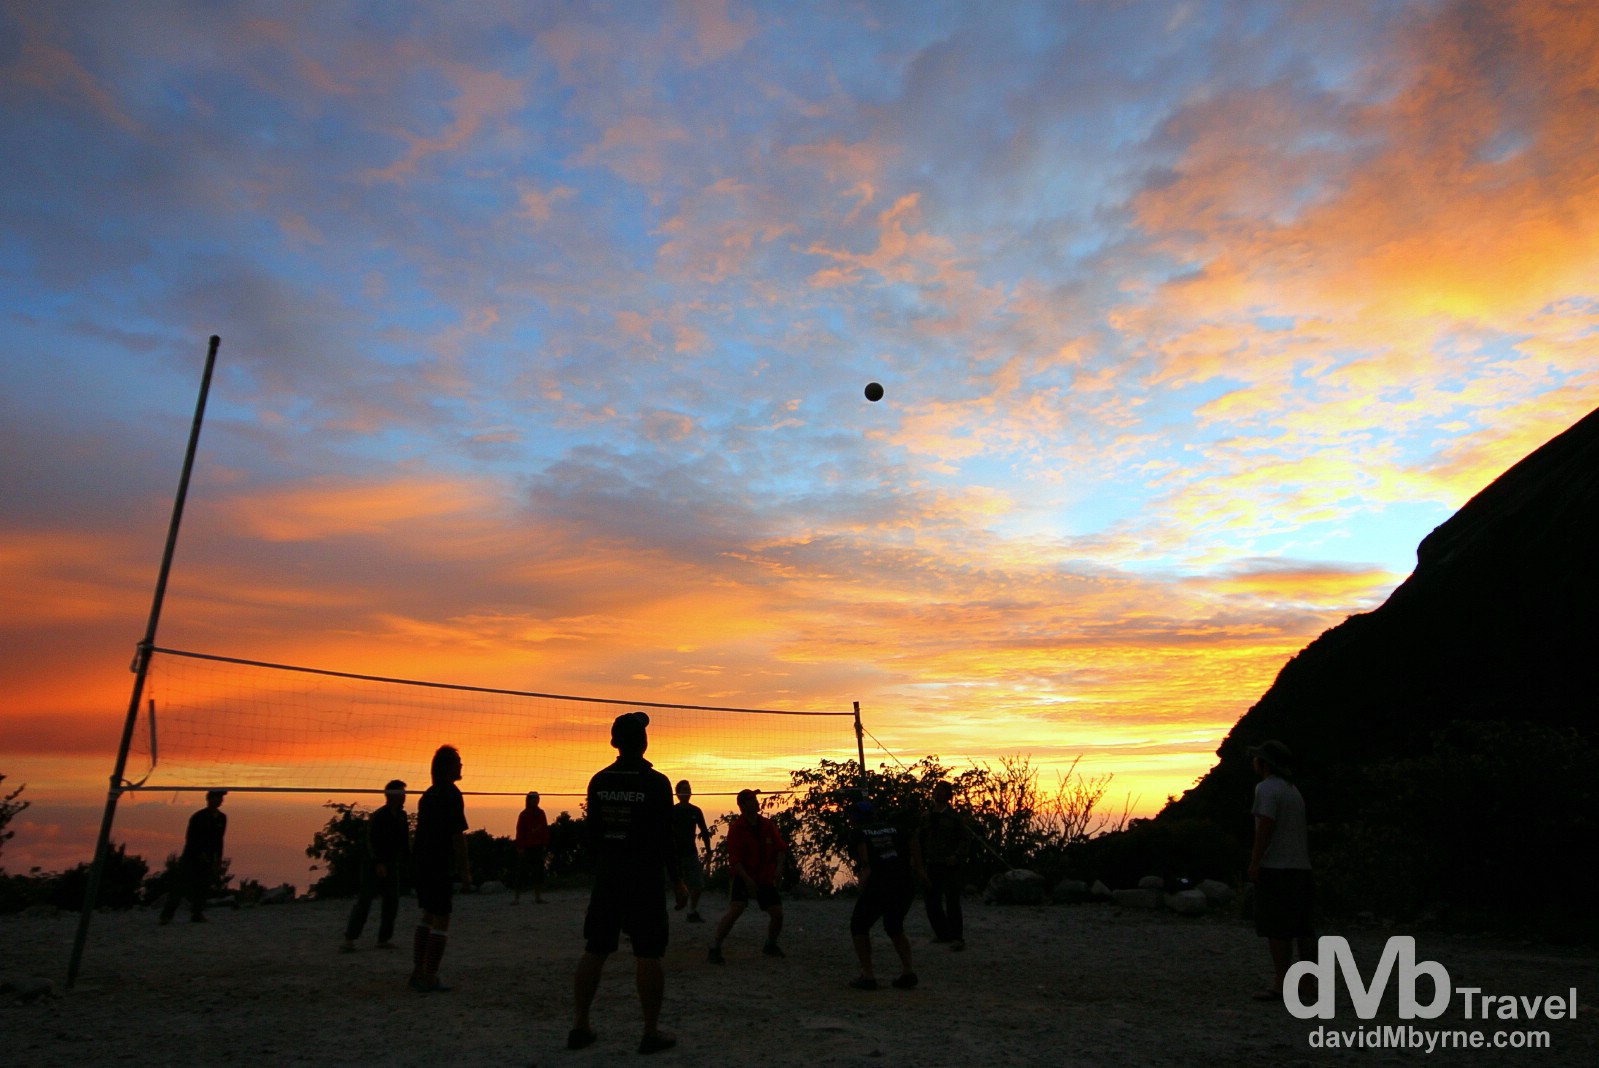 Volleyball at sunset at Laban Rata high on the slopes of Mount Kinabalu, Sabah, Malaysian Borneo. June 22nd 2012. 